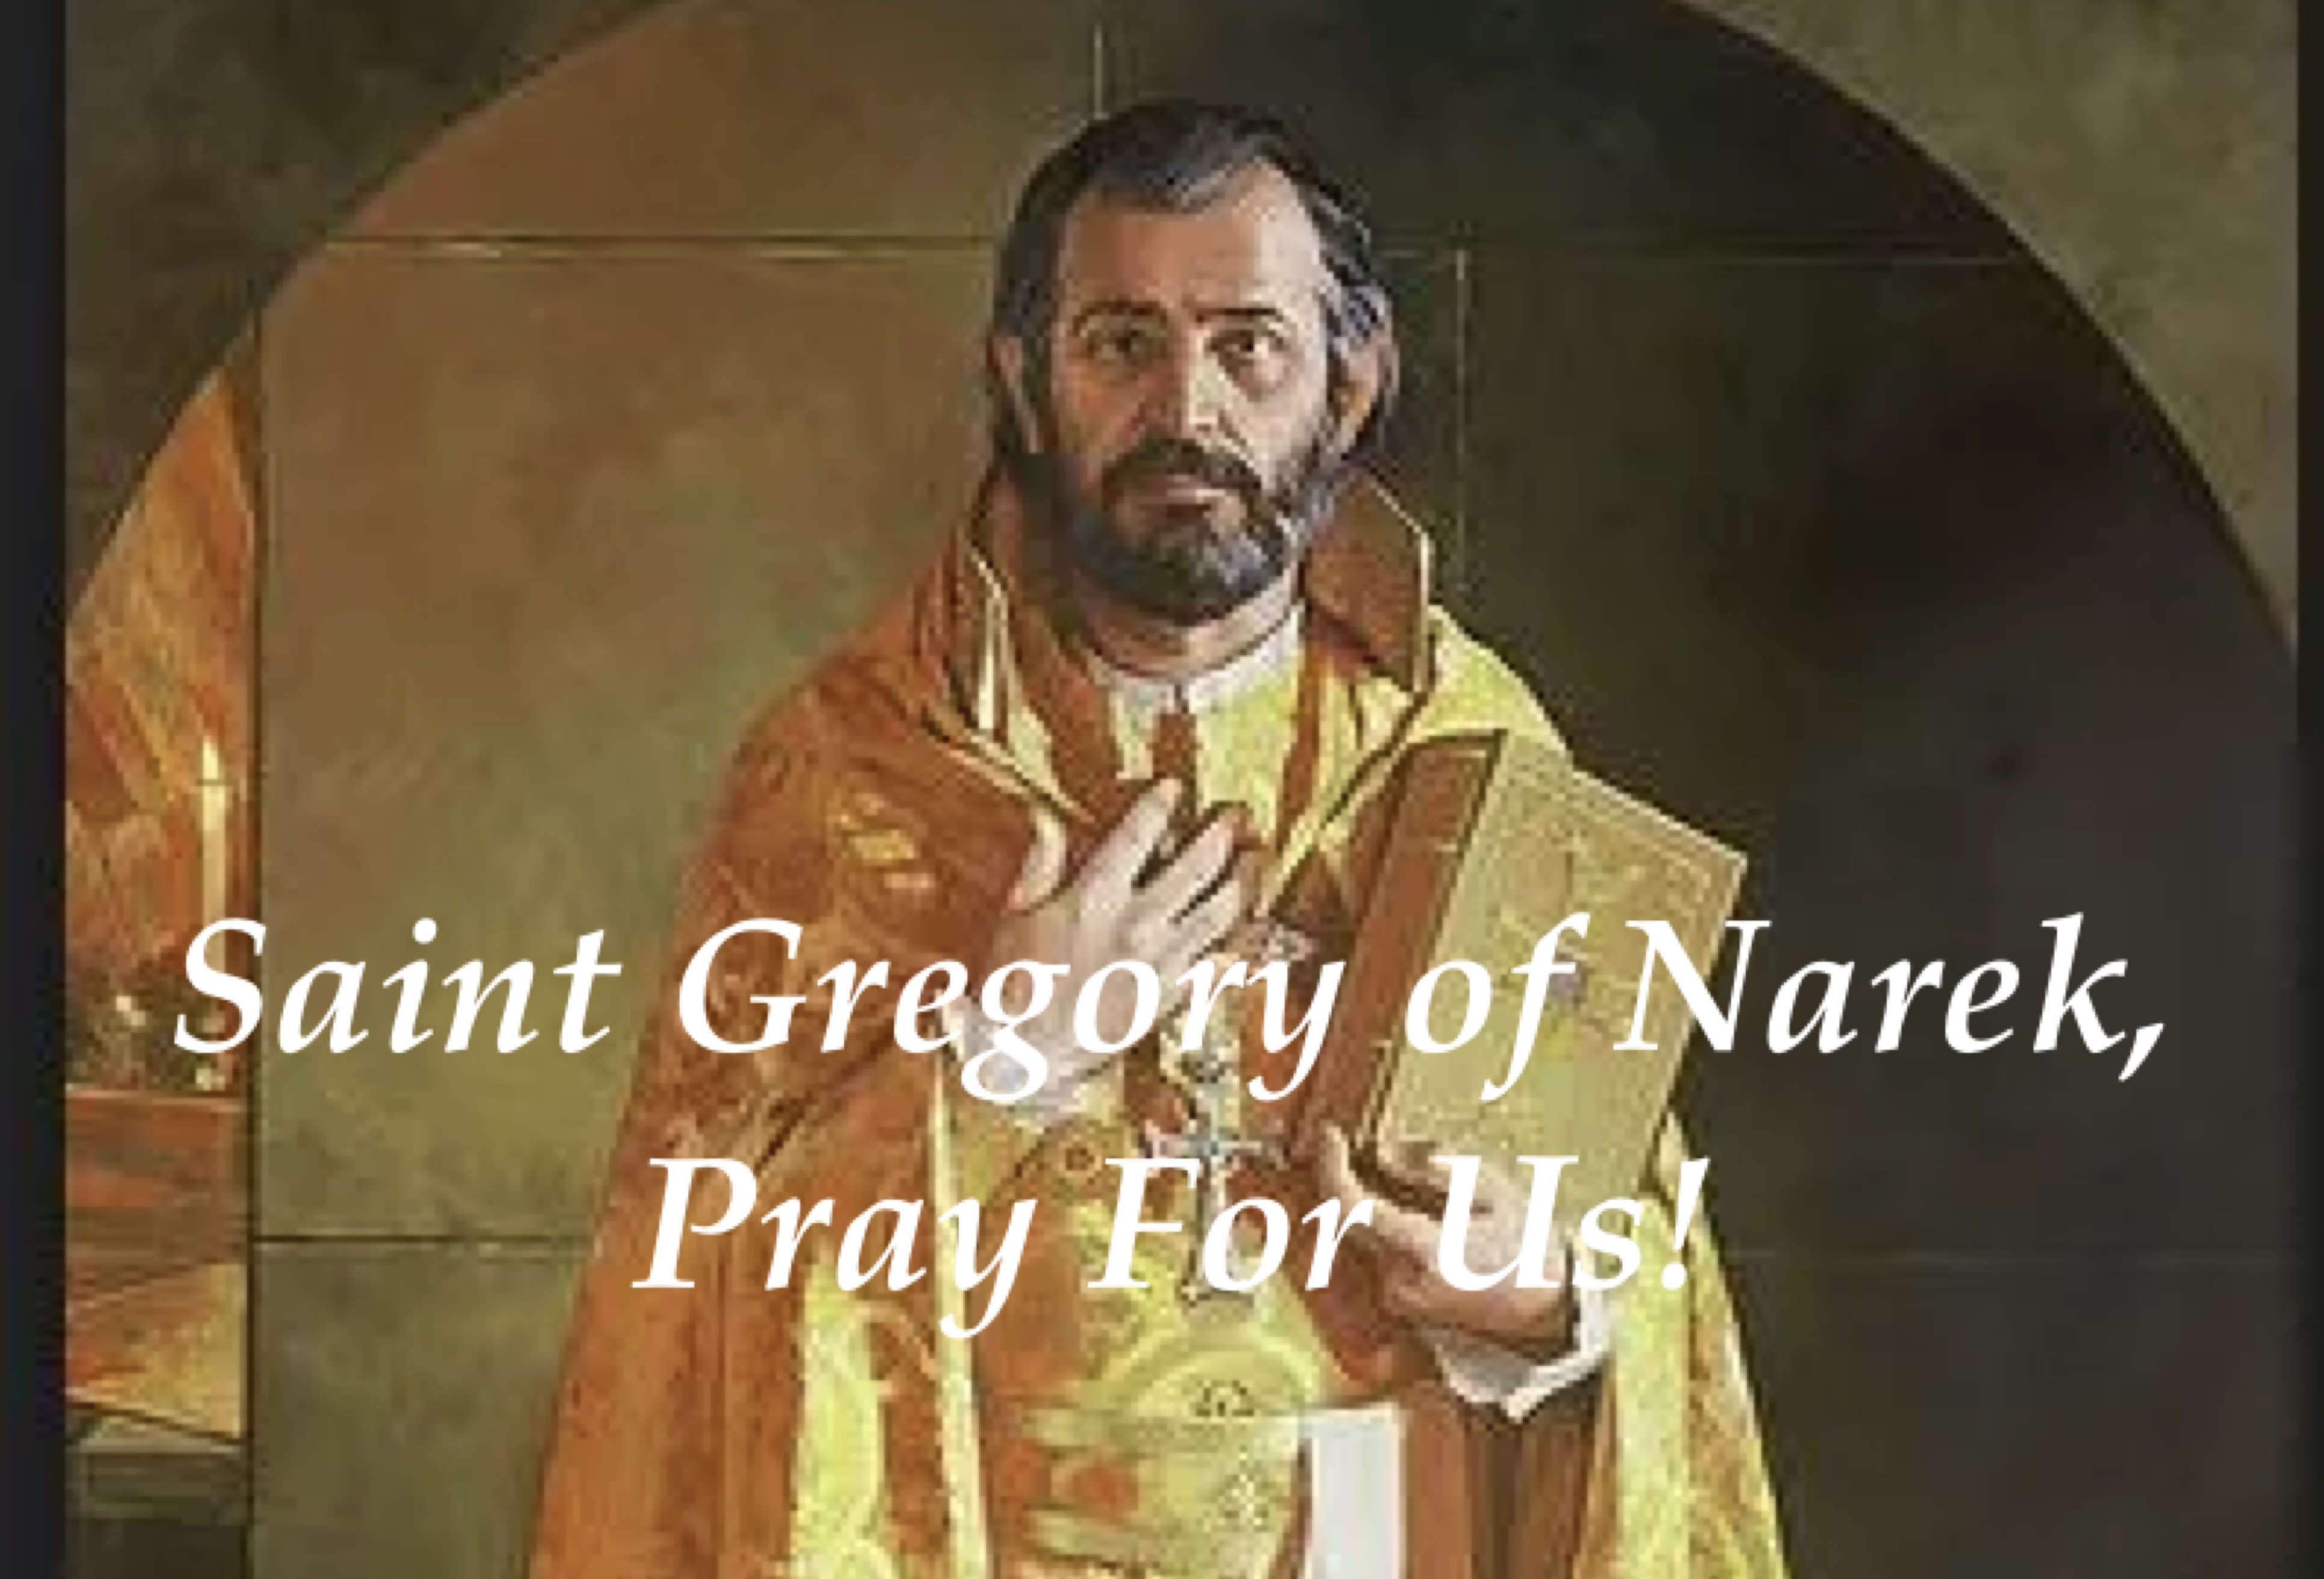 27th February - Saint Gregory of Narek